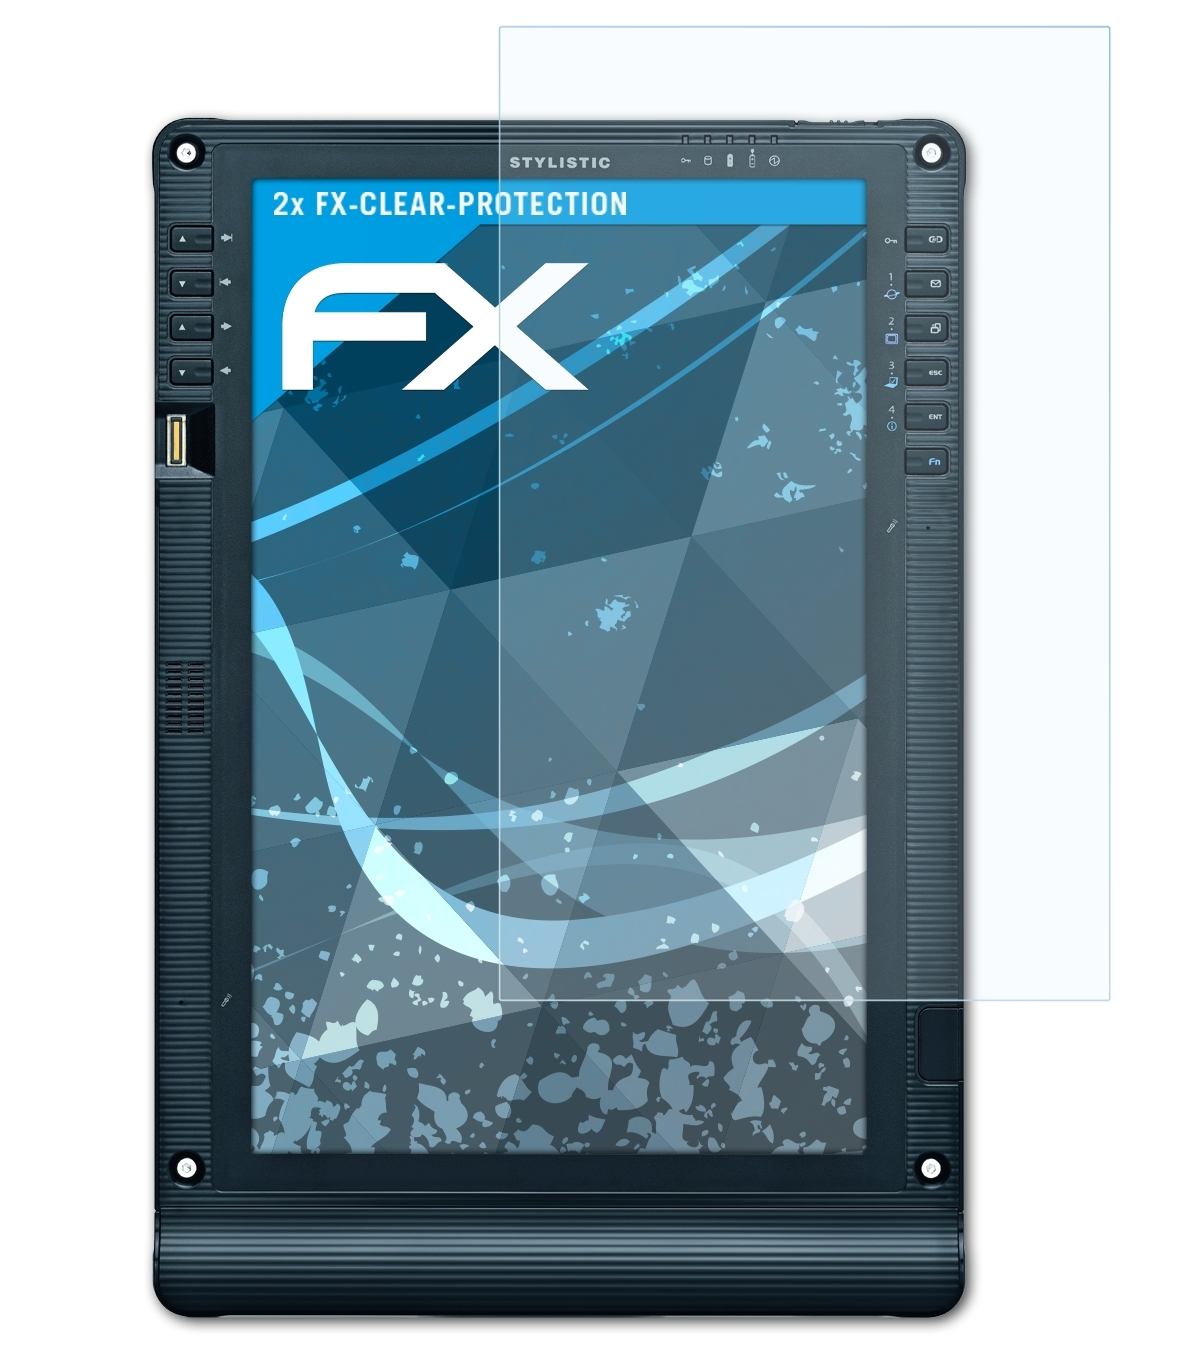 ATFOLIX 2x FX-Clear Displayschutz(für ST6012) Fujitsu Stylistic